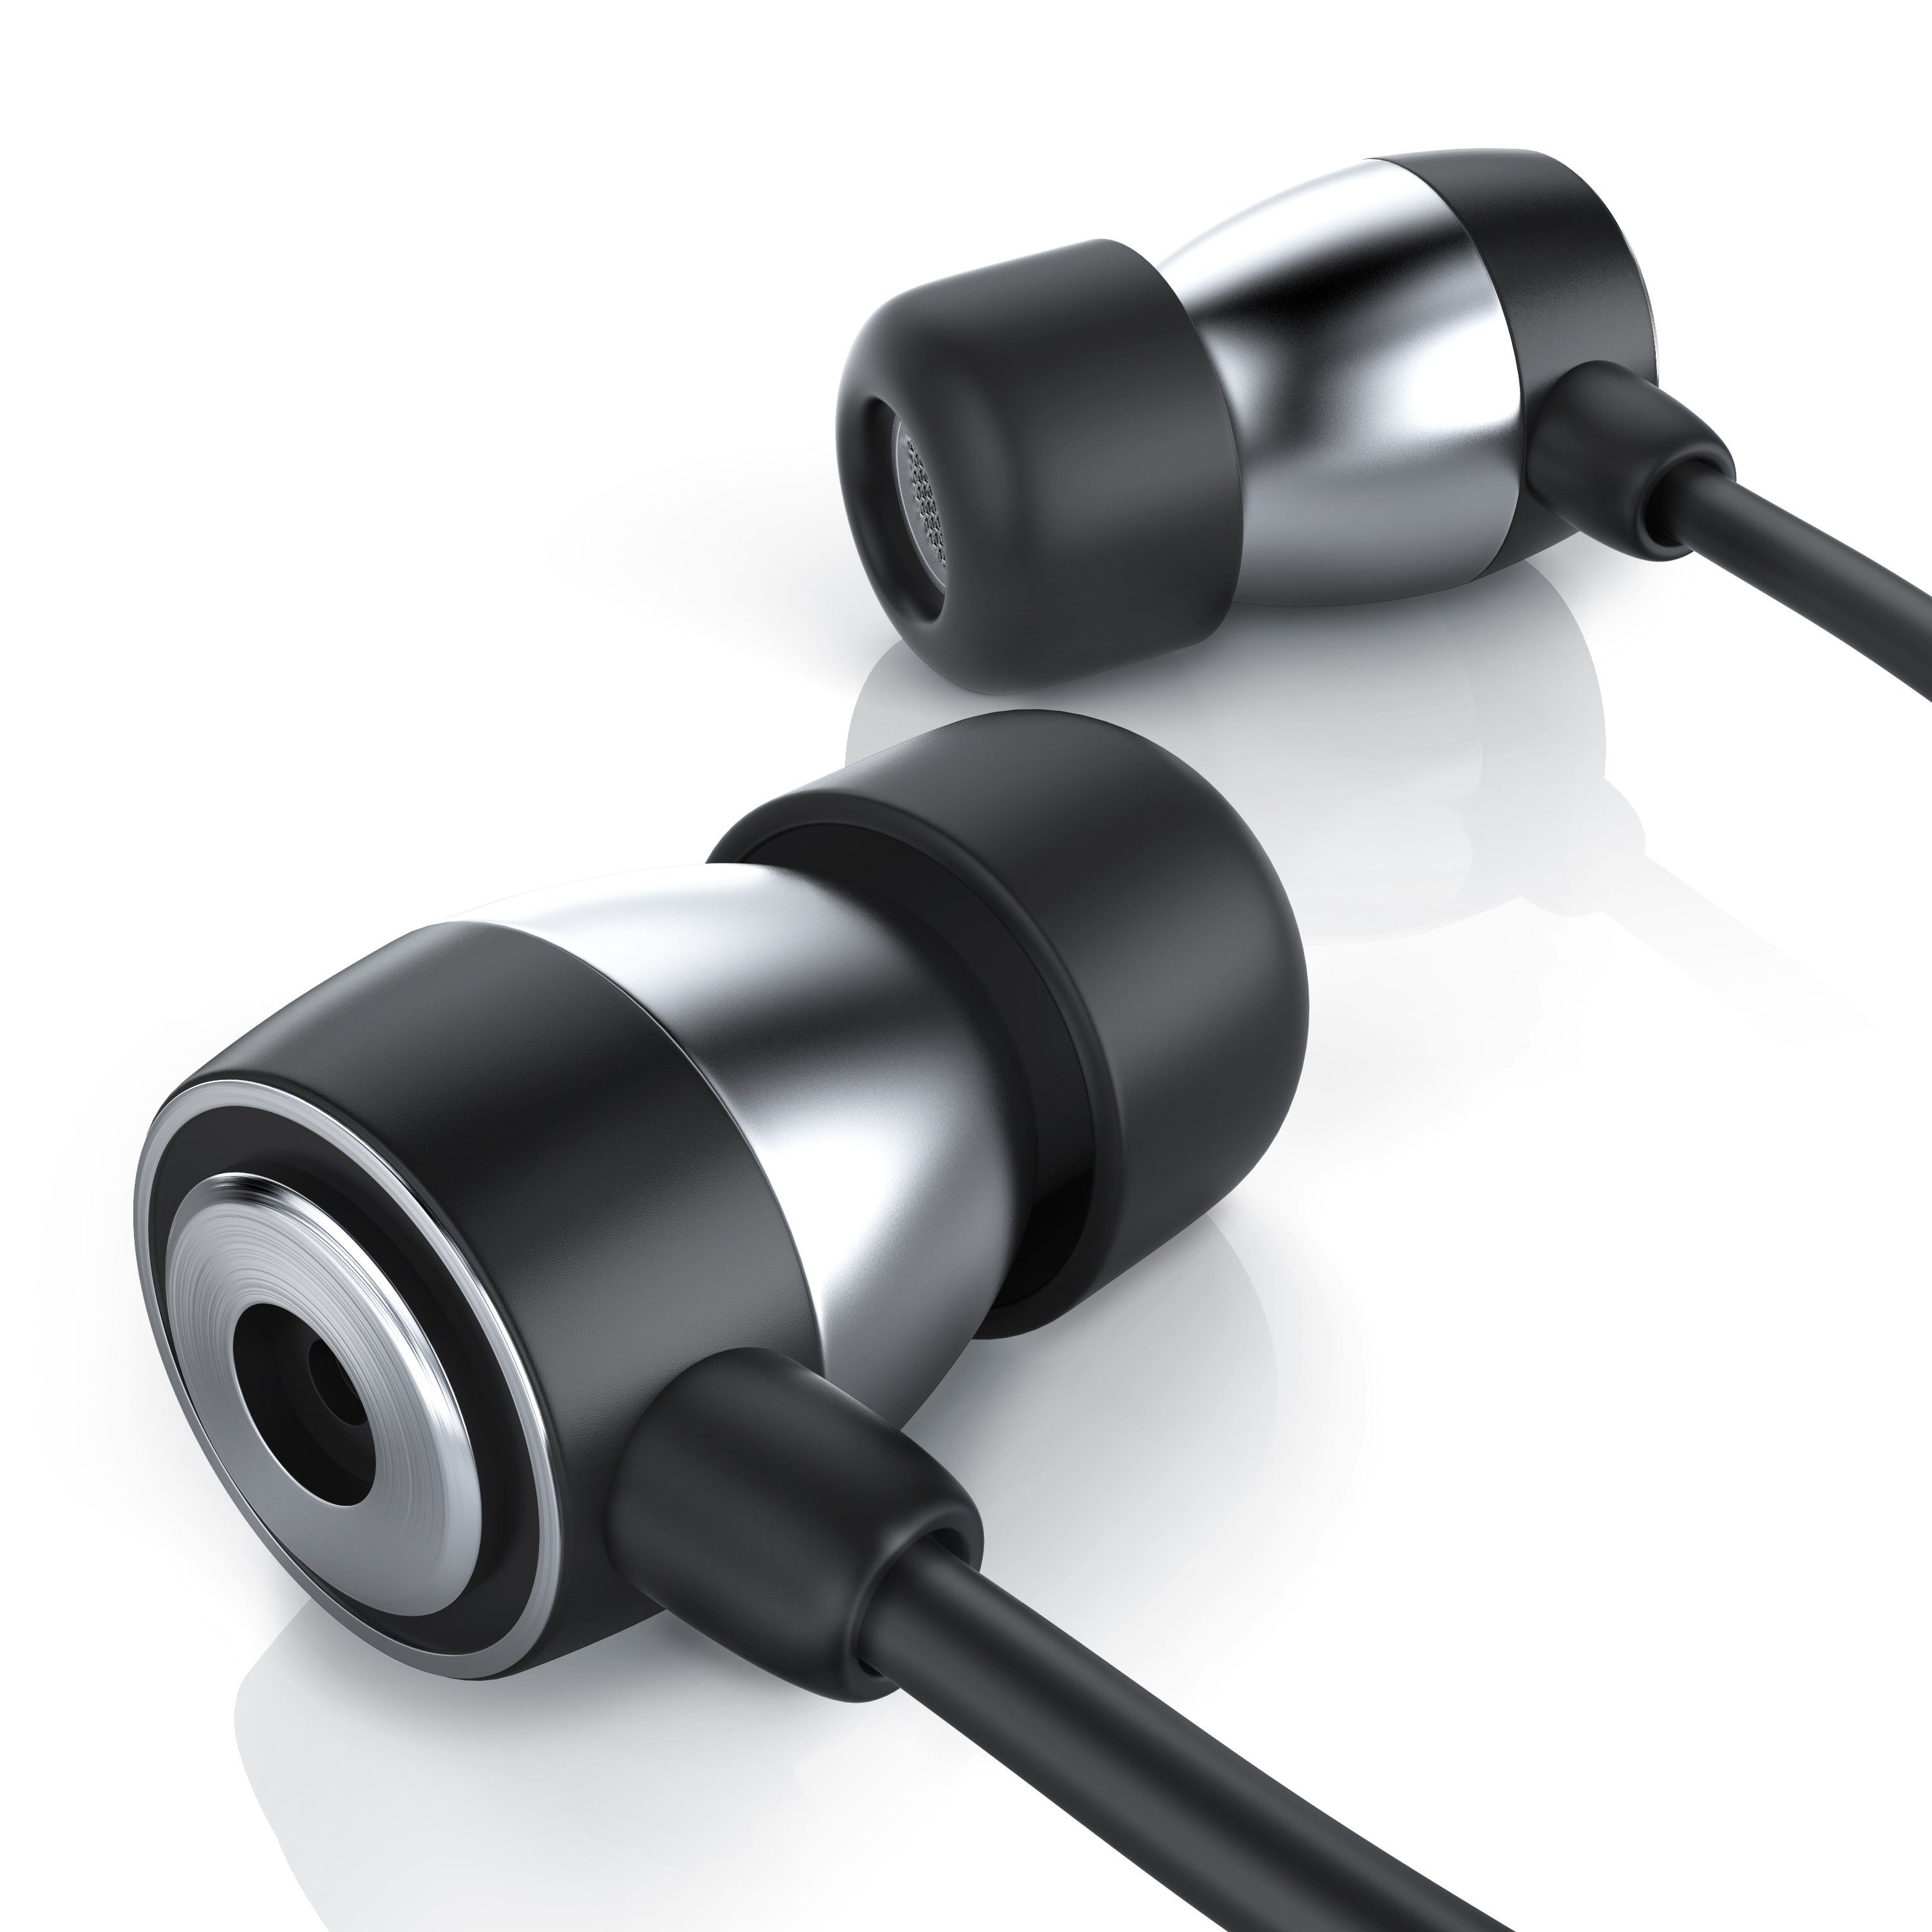 CSL mit Knickschutz) Ohrhöher, 10mm Schallwandler, In-Ear-Kopfhörer Aramid-Kabel (InEar